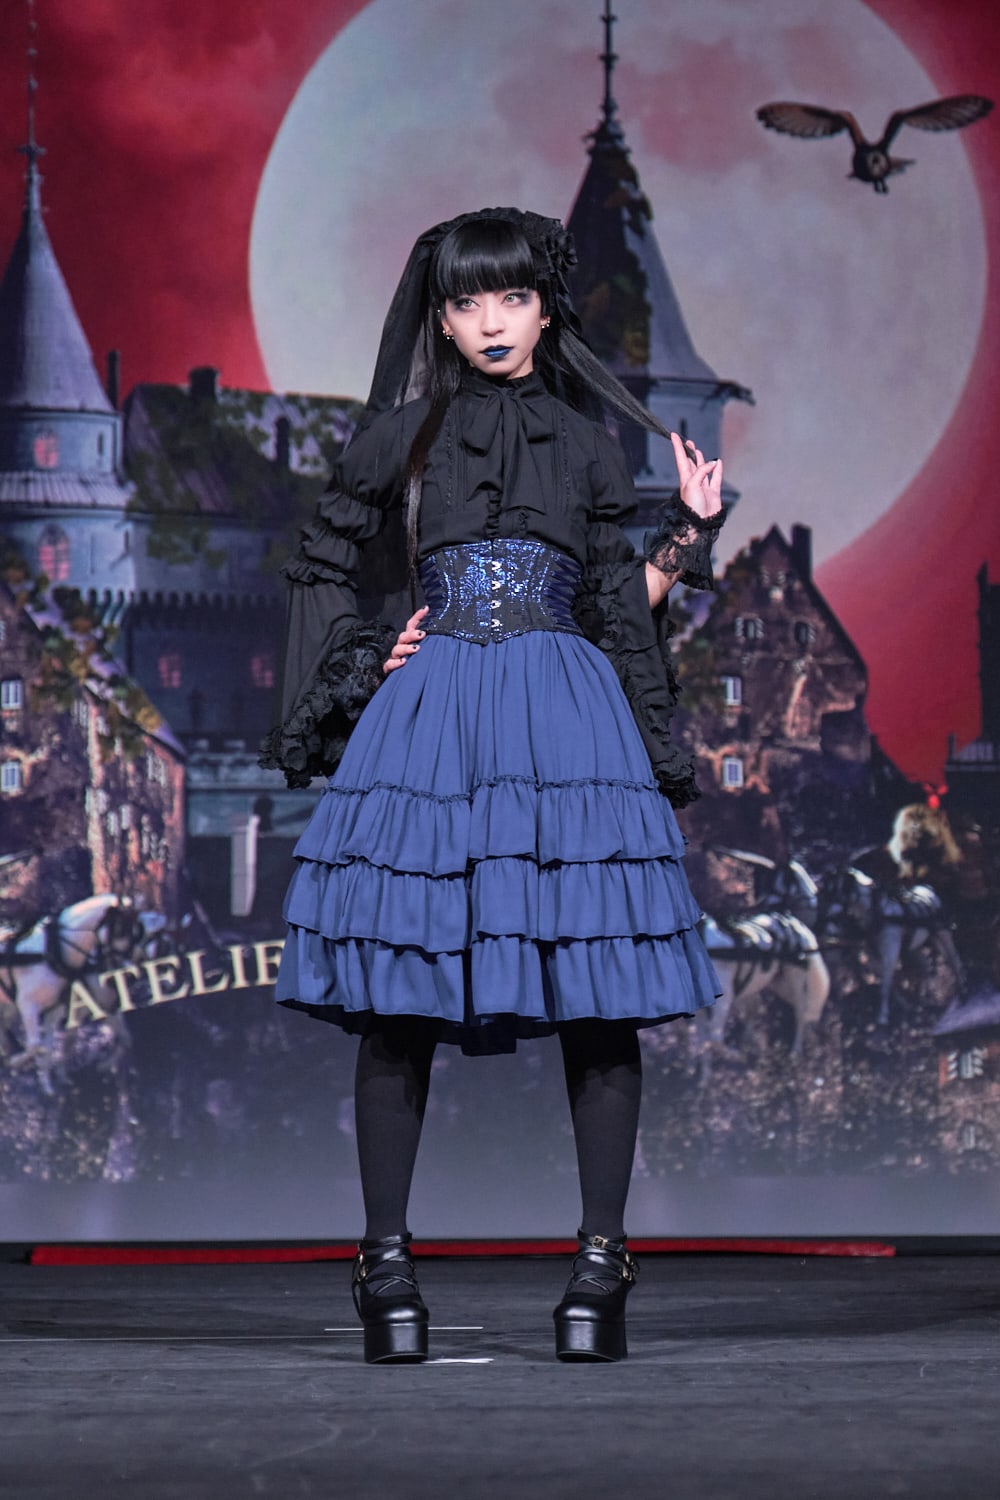 Atelier Pierrot gothic lolita model wearing black blouse, blue corset and skirt - full body standing pose 1.